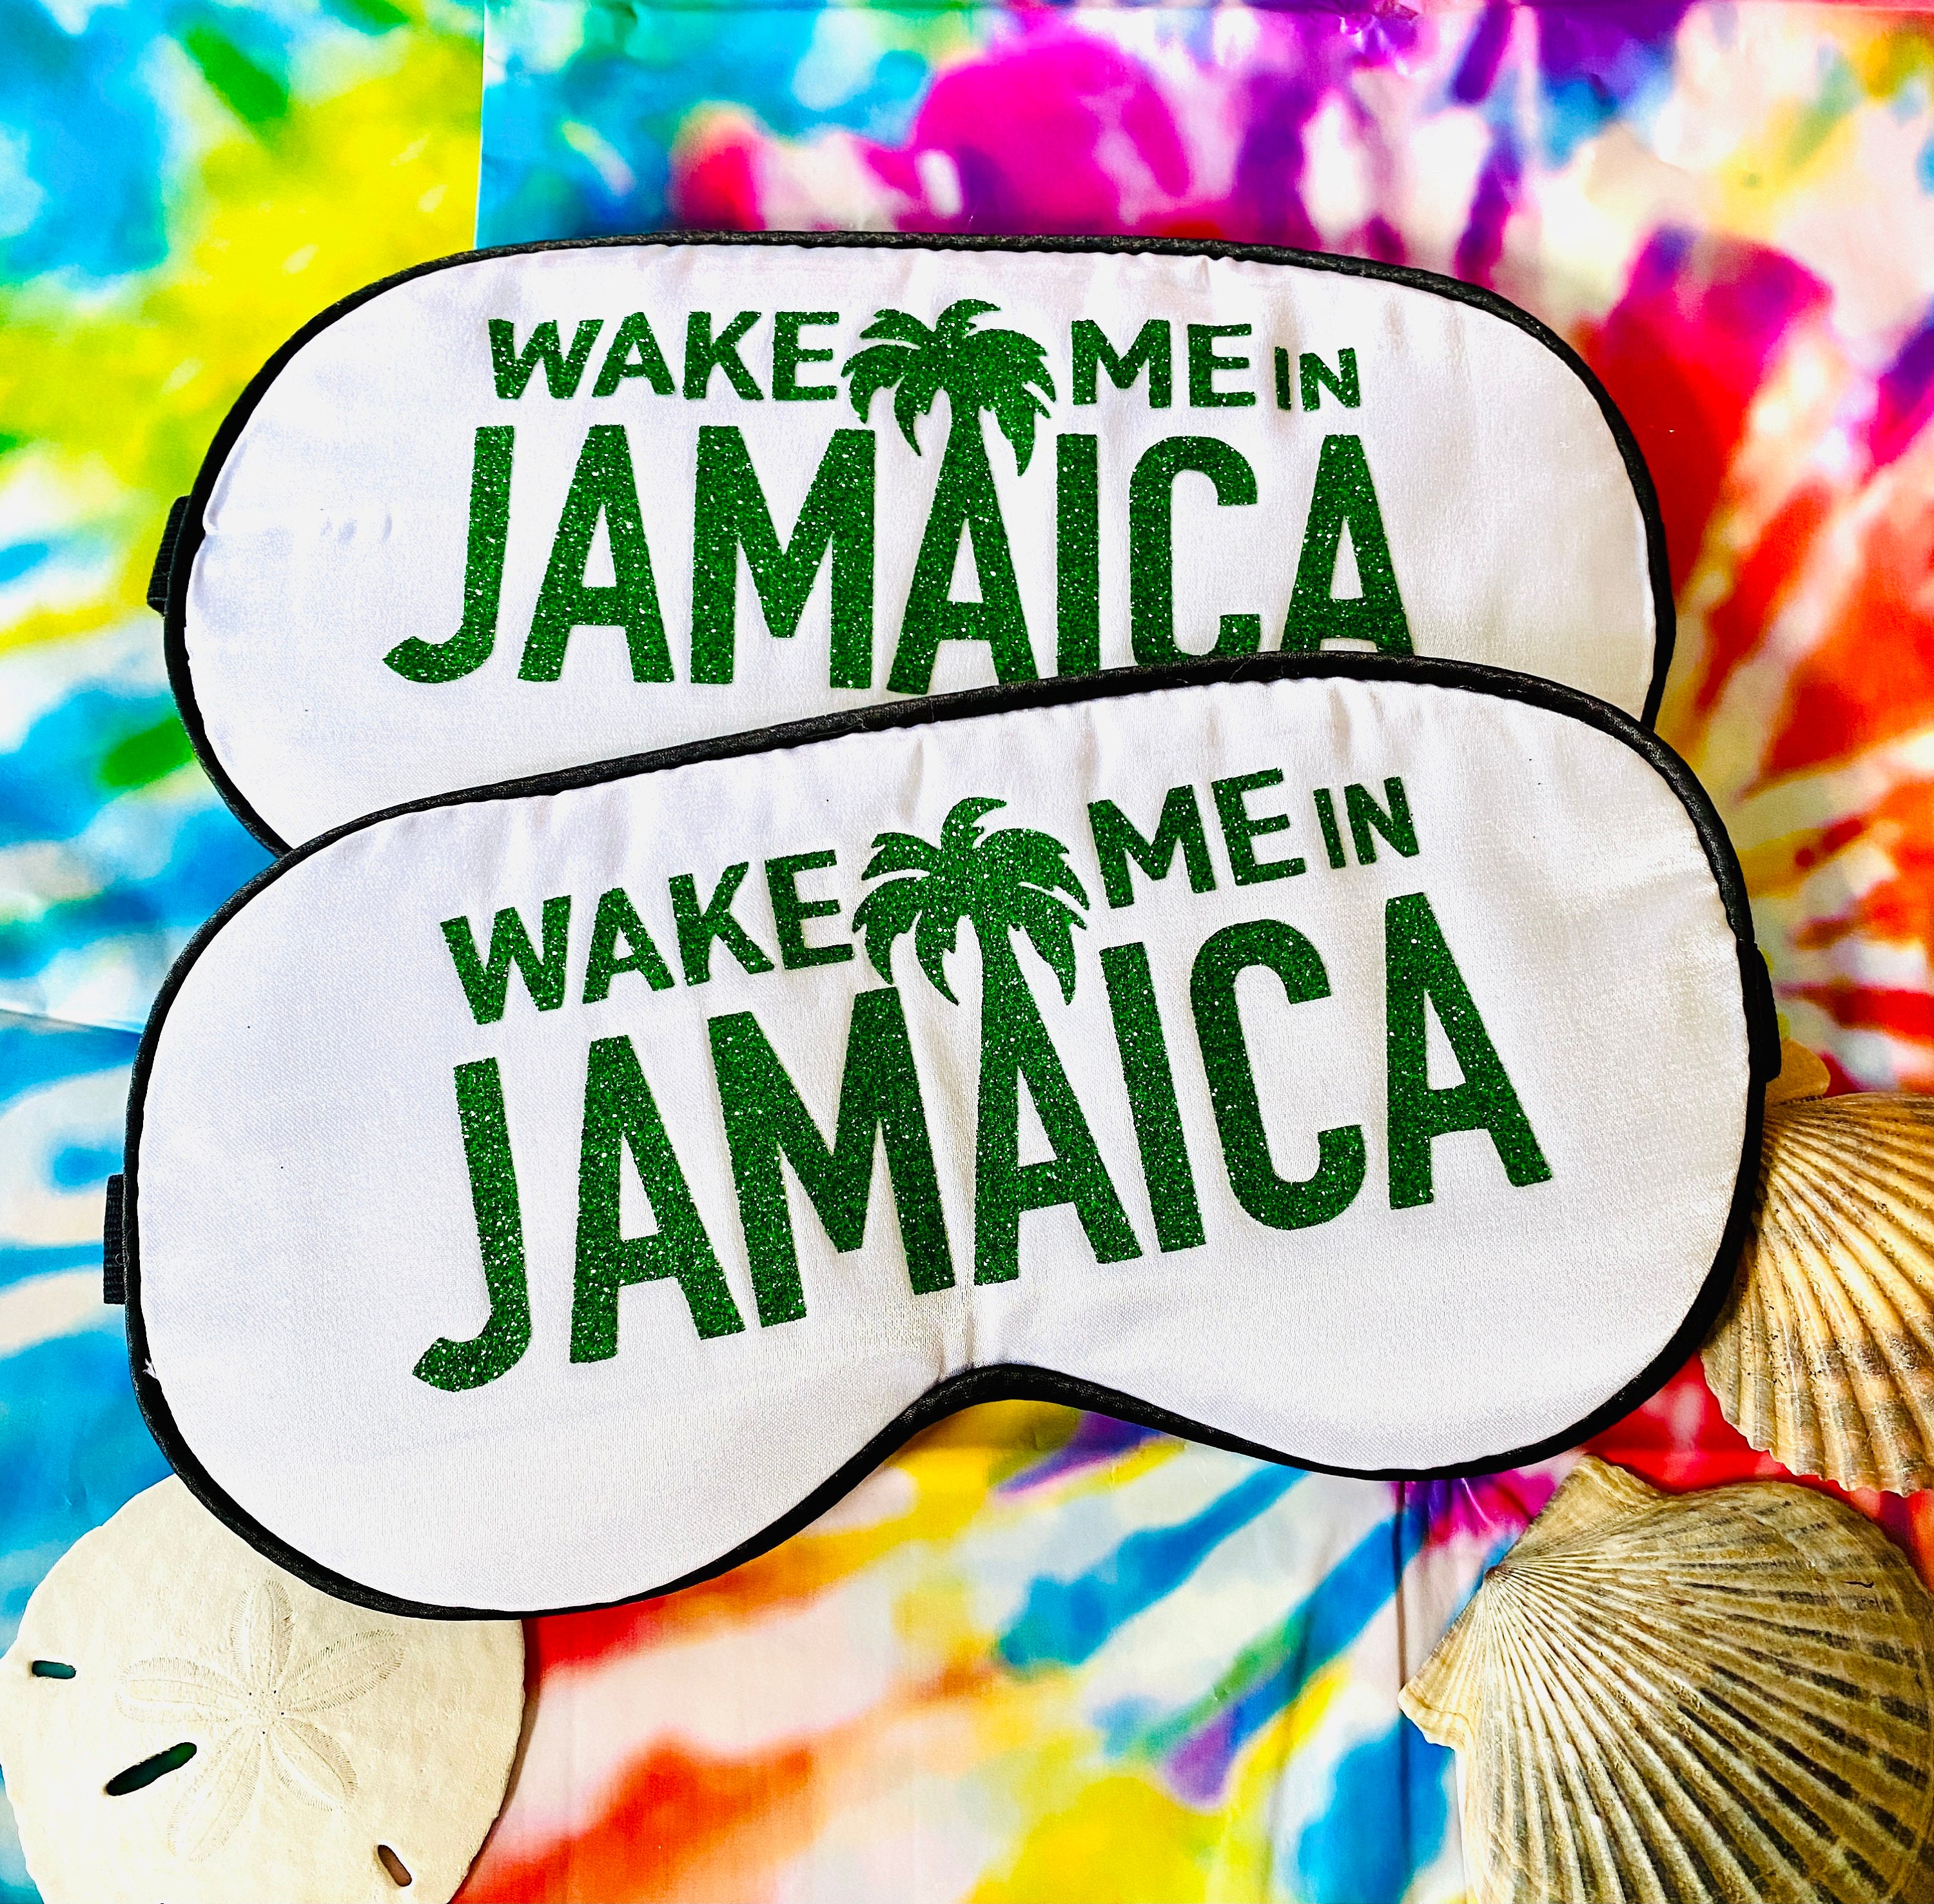 Jamaican Bandana print- The fabric of life! Source: @thebellablair”